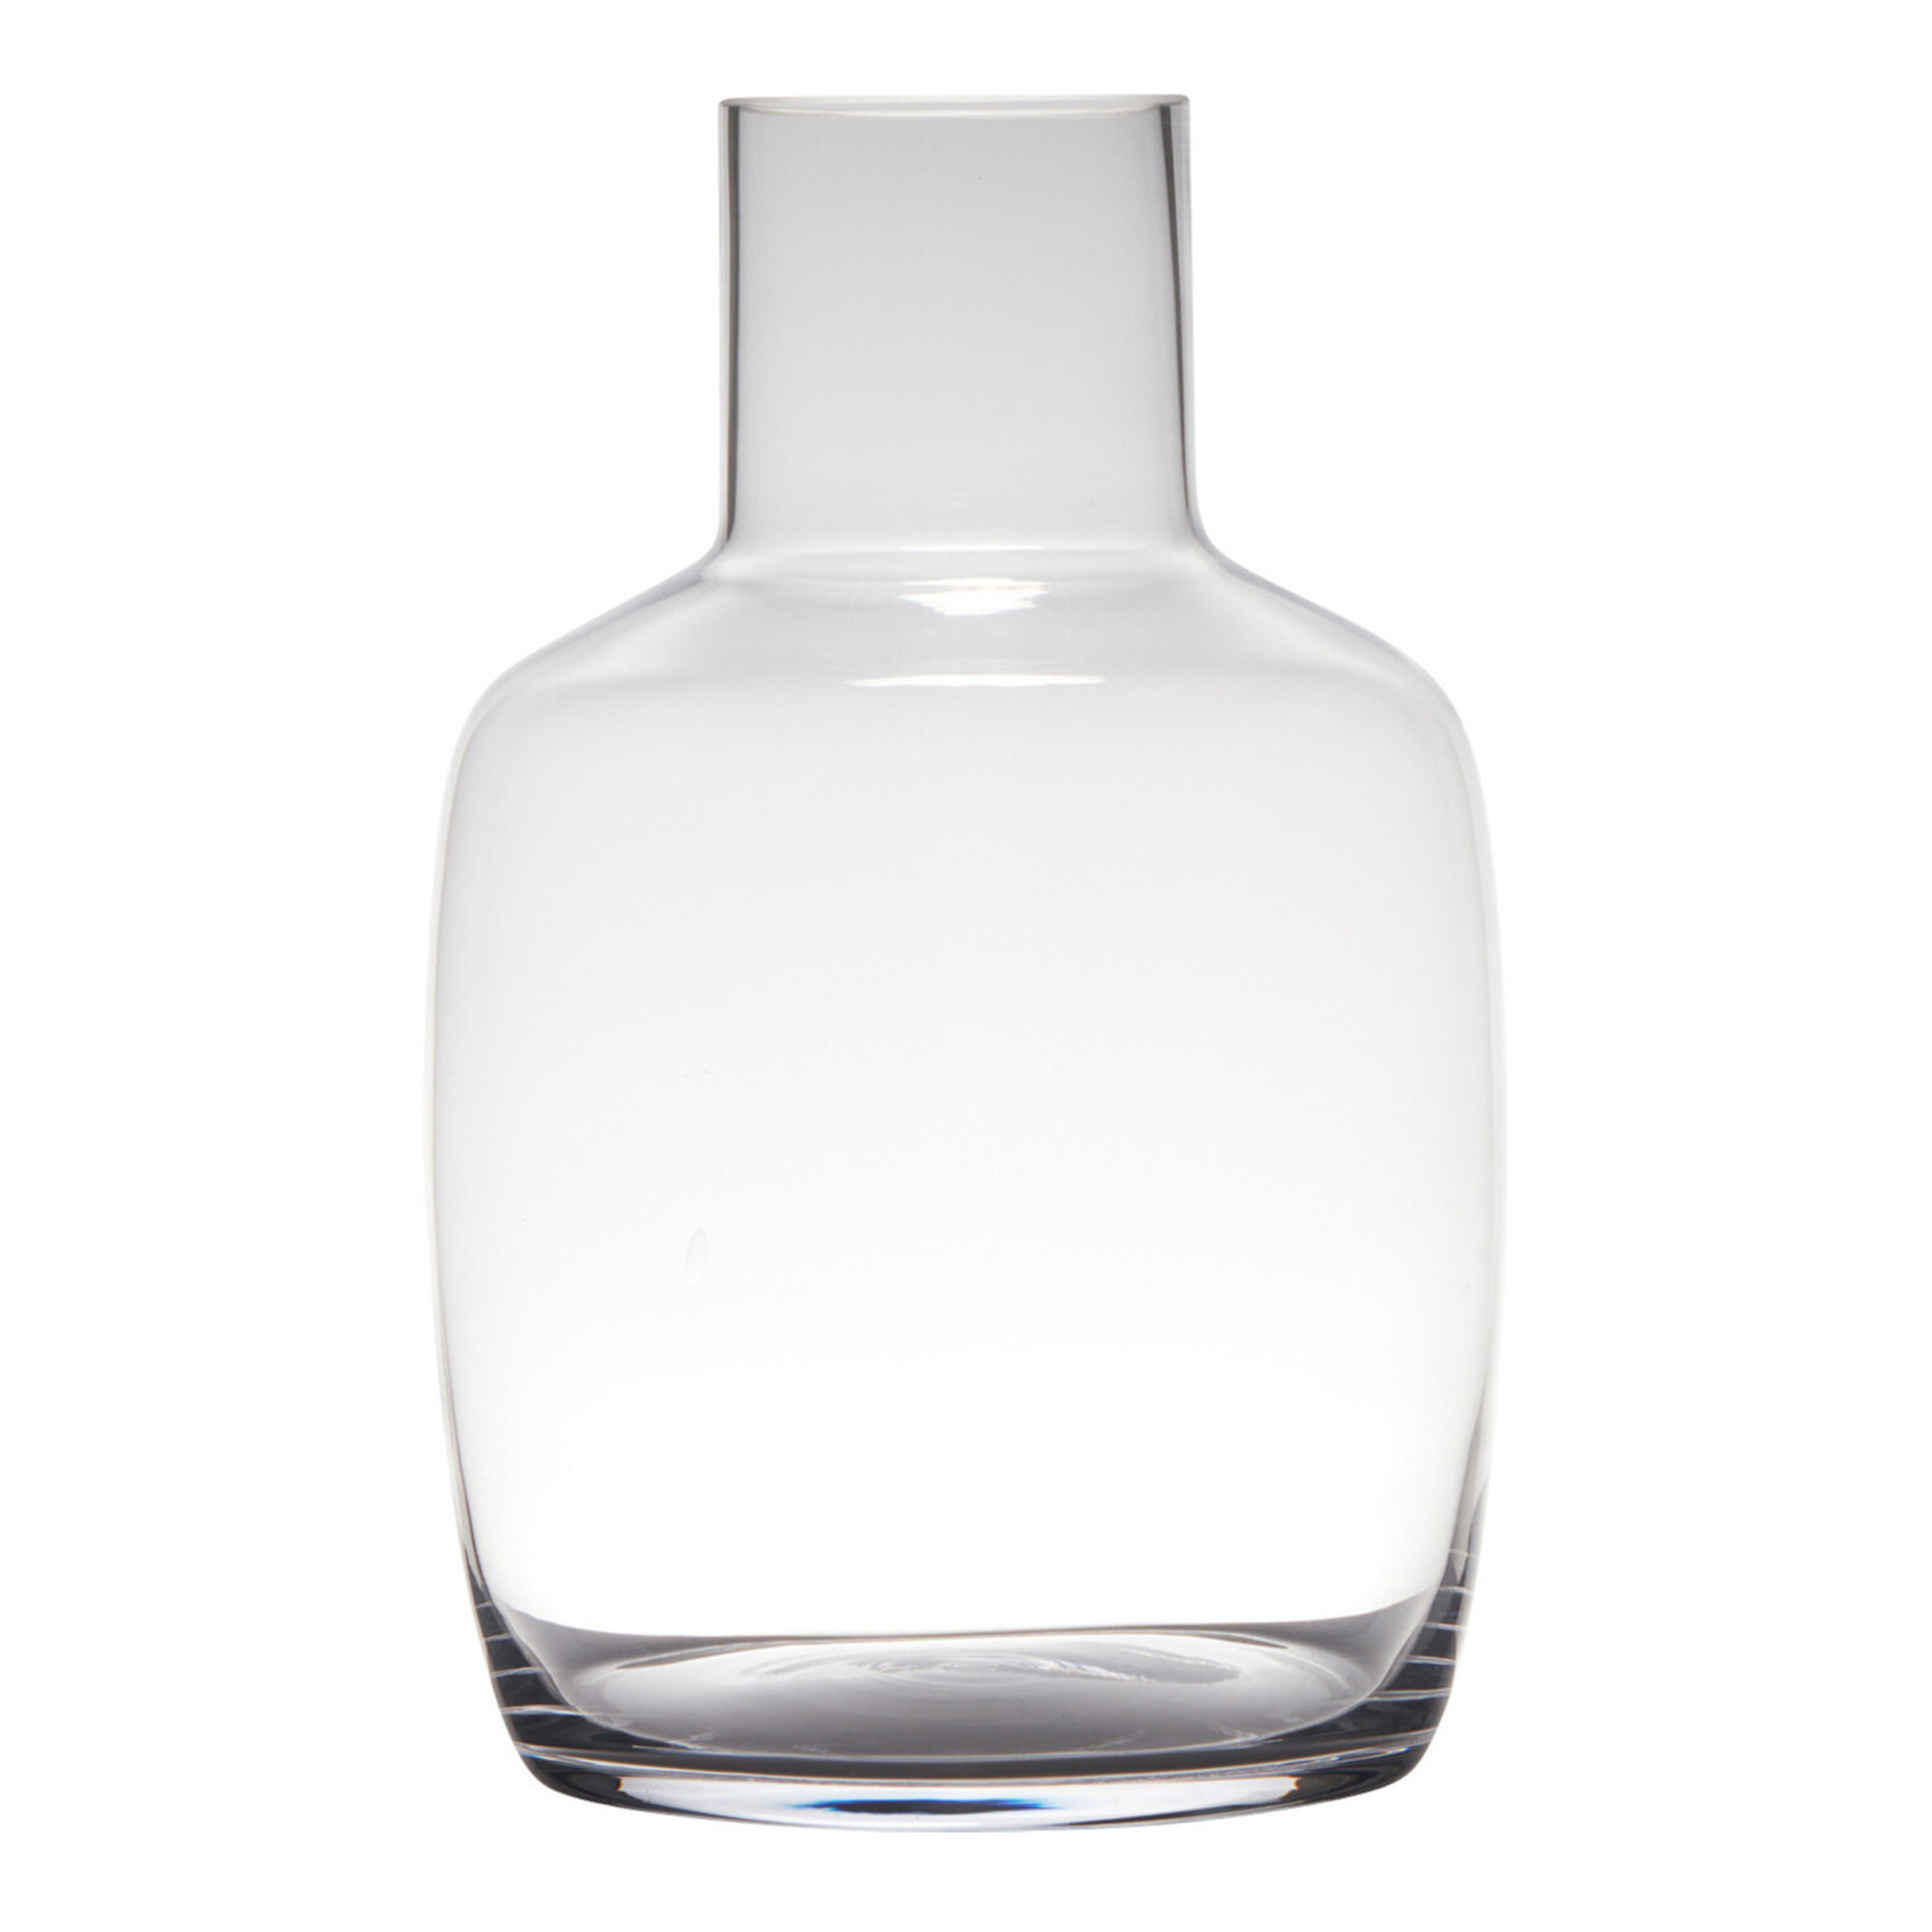 Merkloos Transparante luxe vaas/vazen van glas 30 x 19 cm -